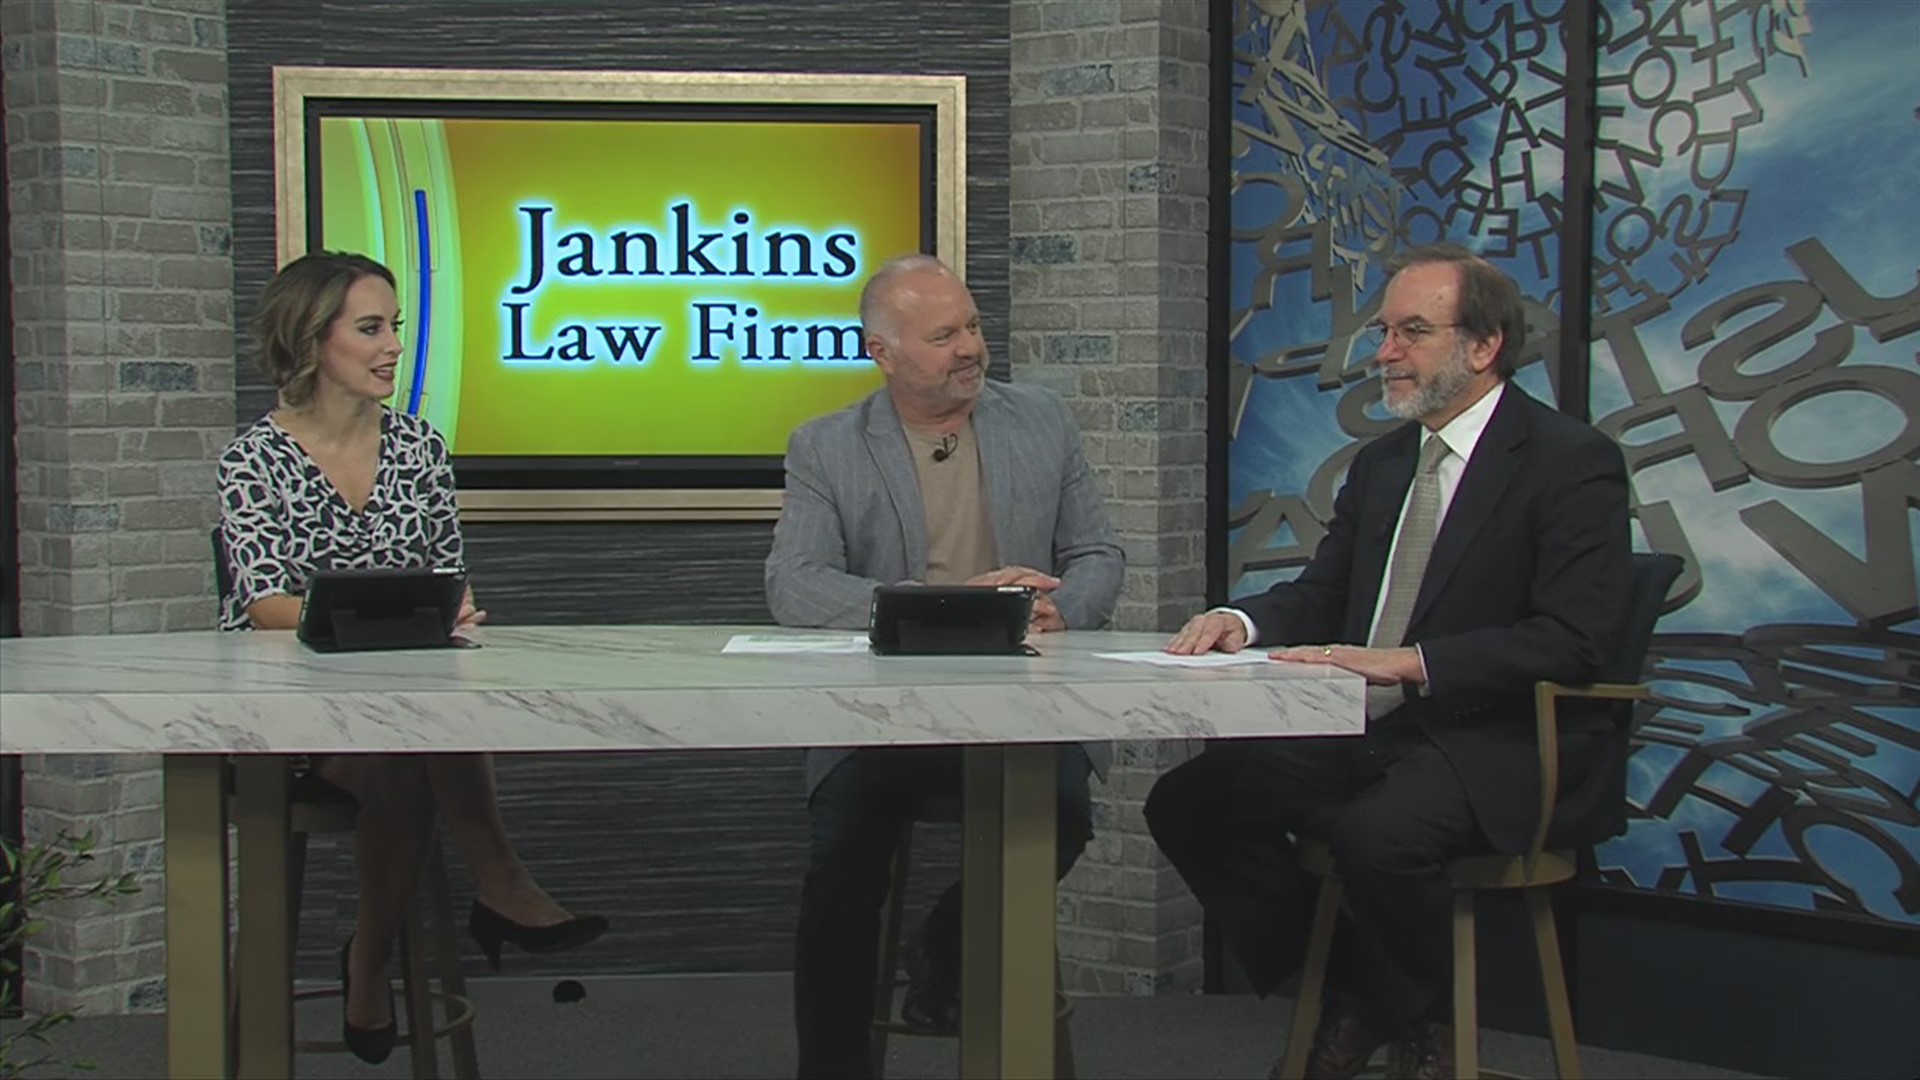 Jankins Law Firm